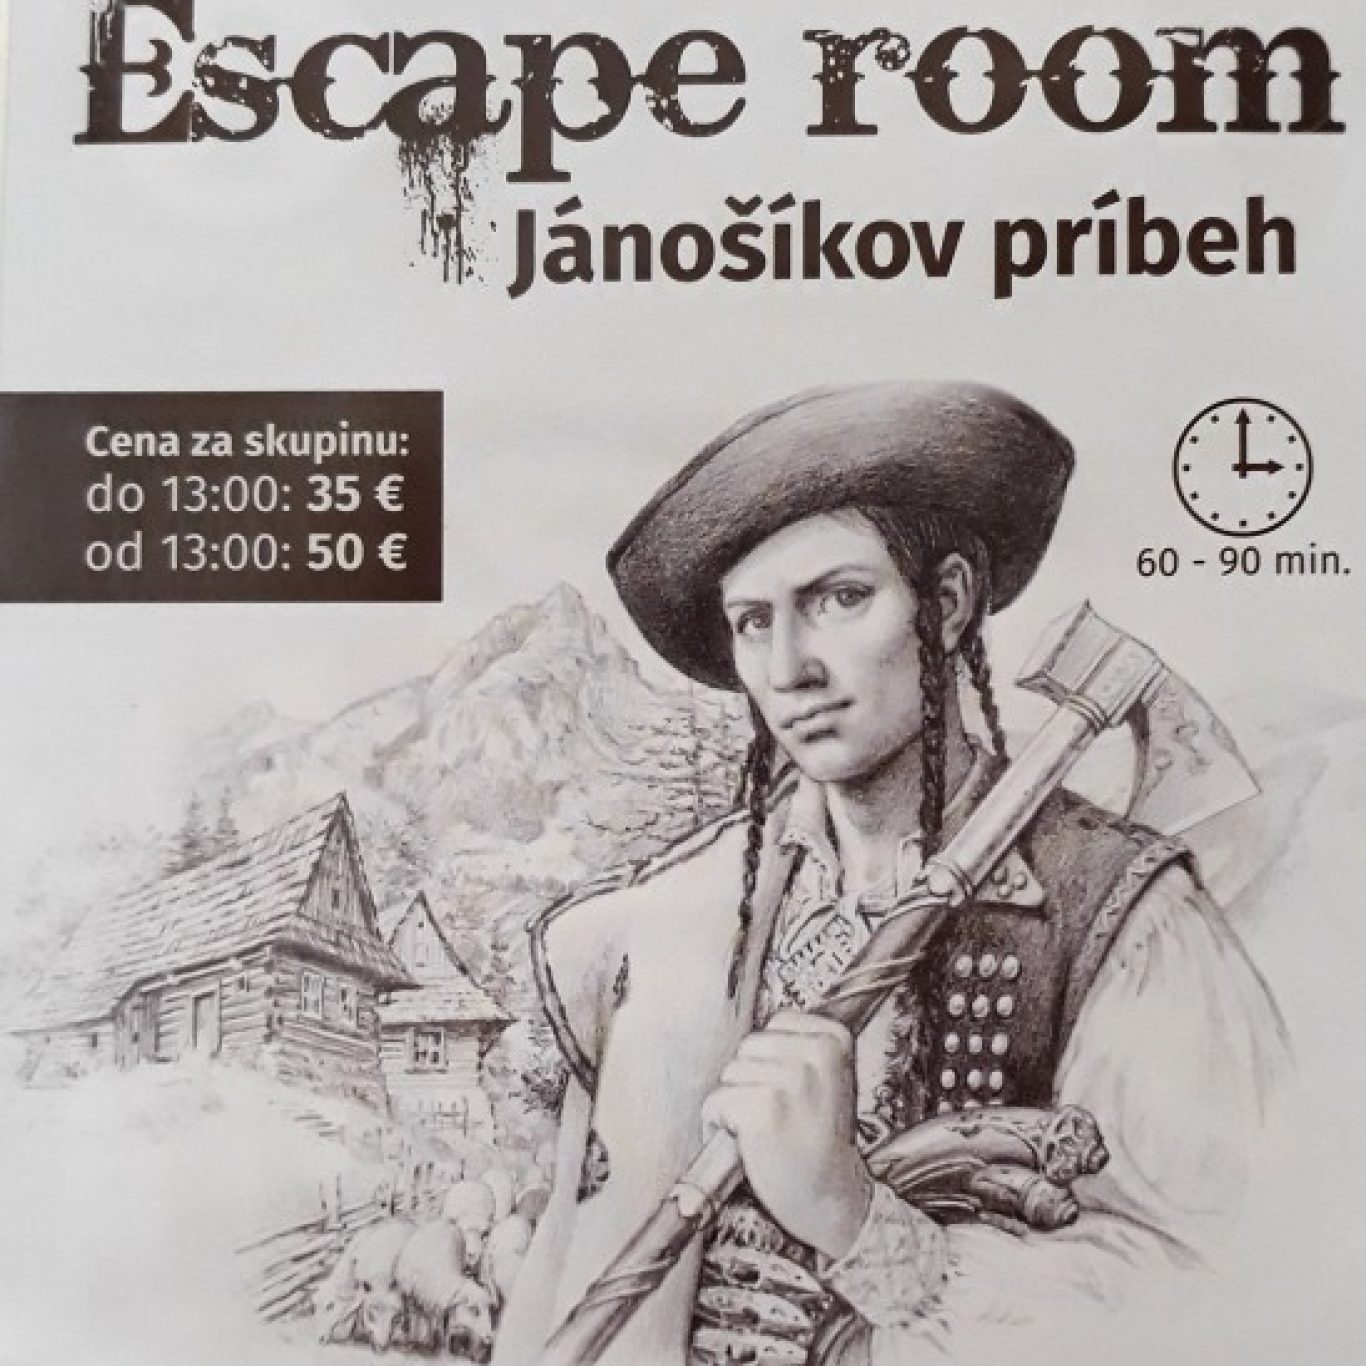 1601901808_escape_room_janosikov_pribeh_kopia_1